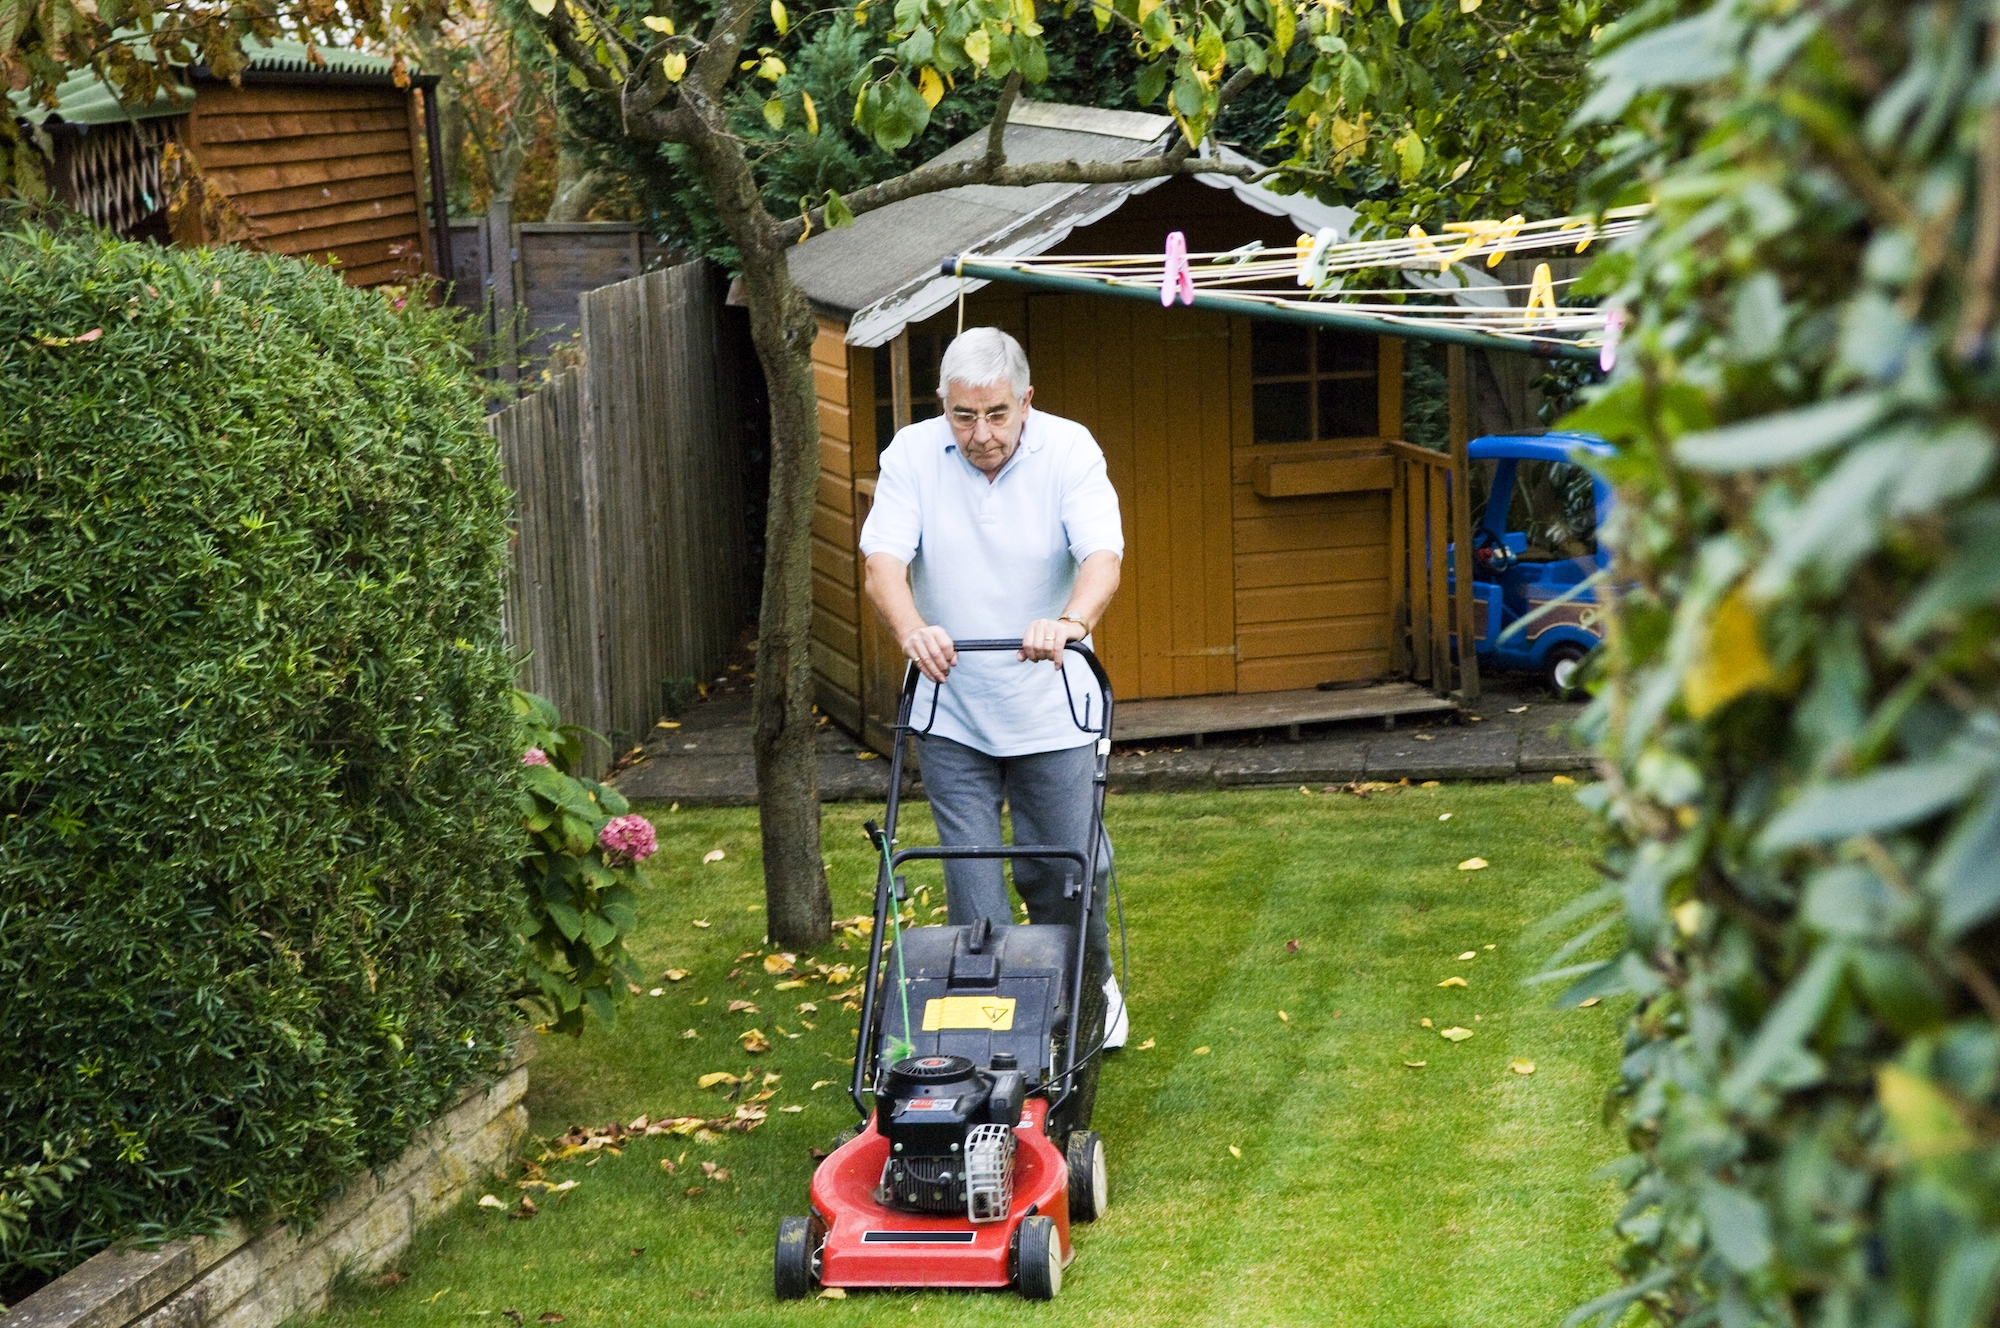 A man uses a walk-behind lawn mower in a backyard